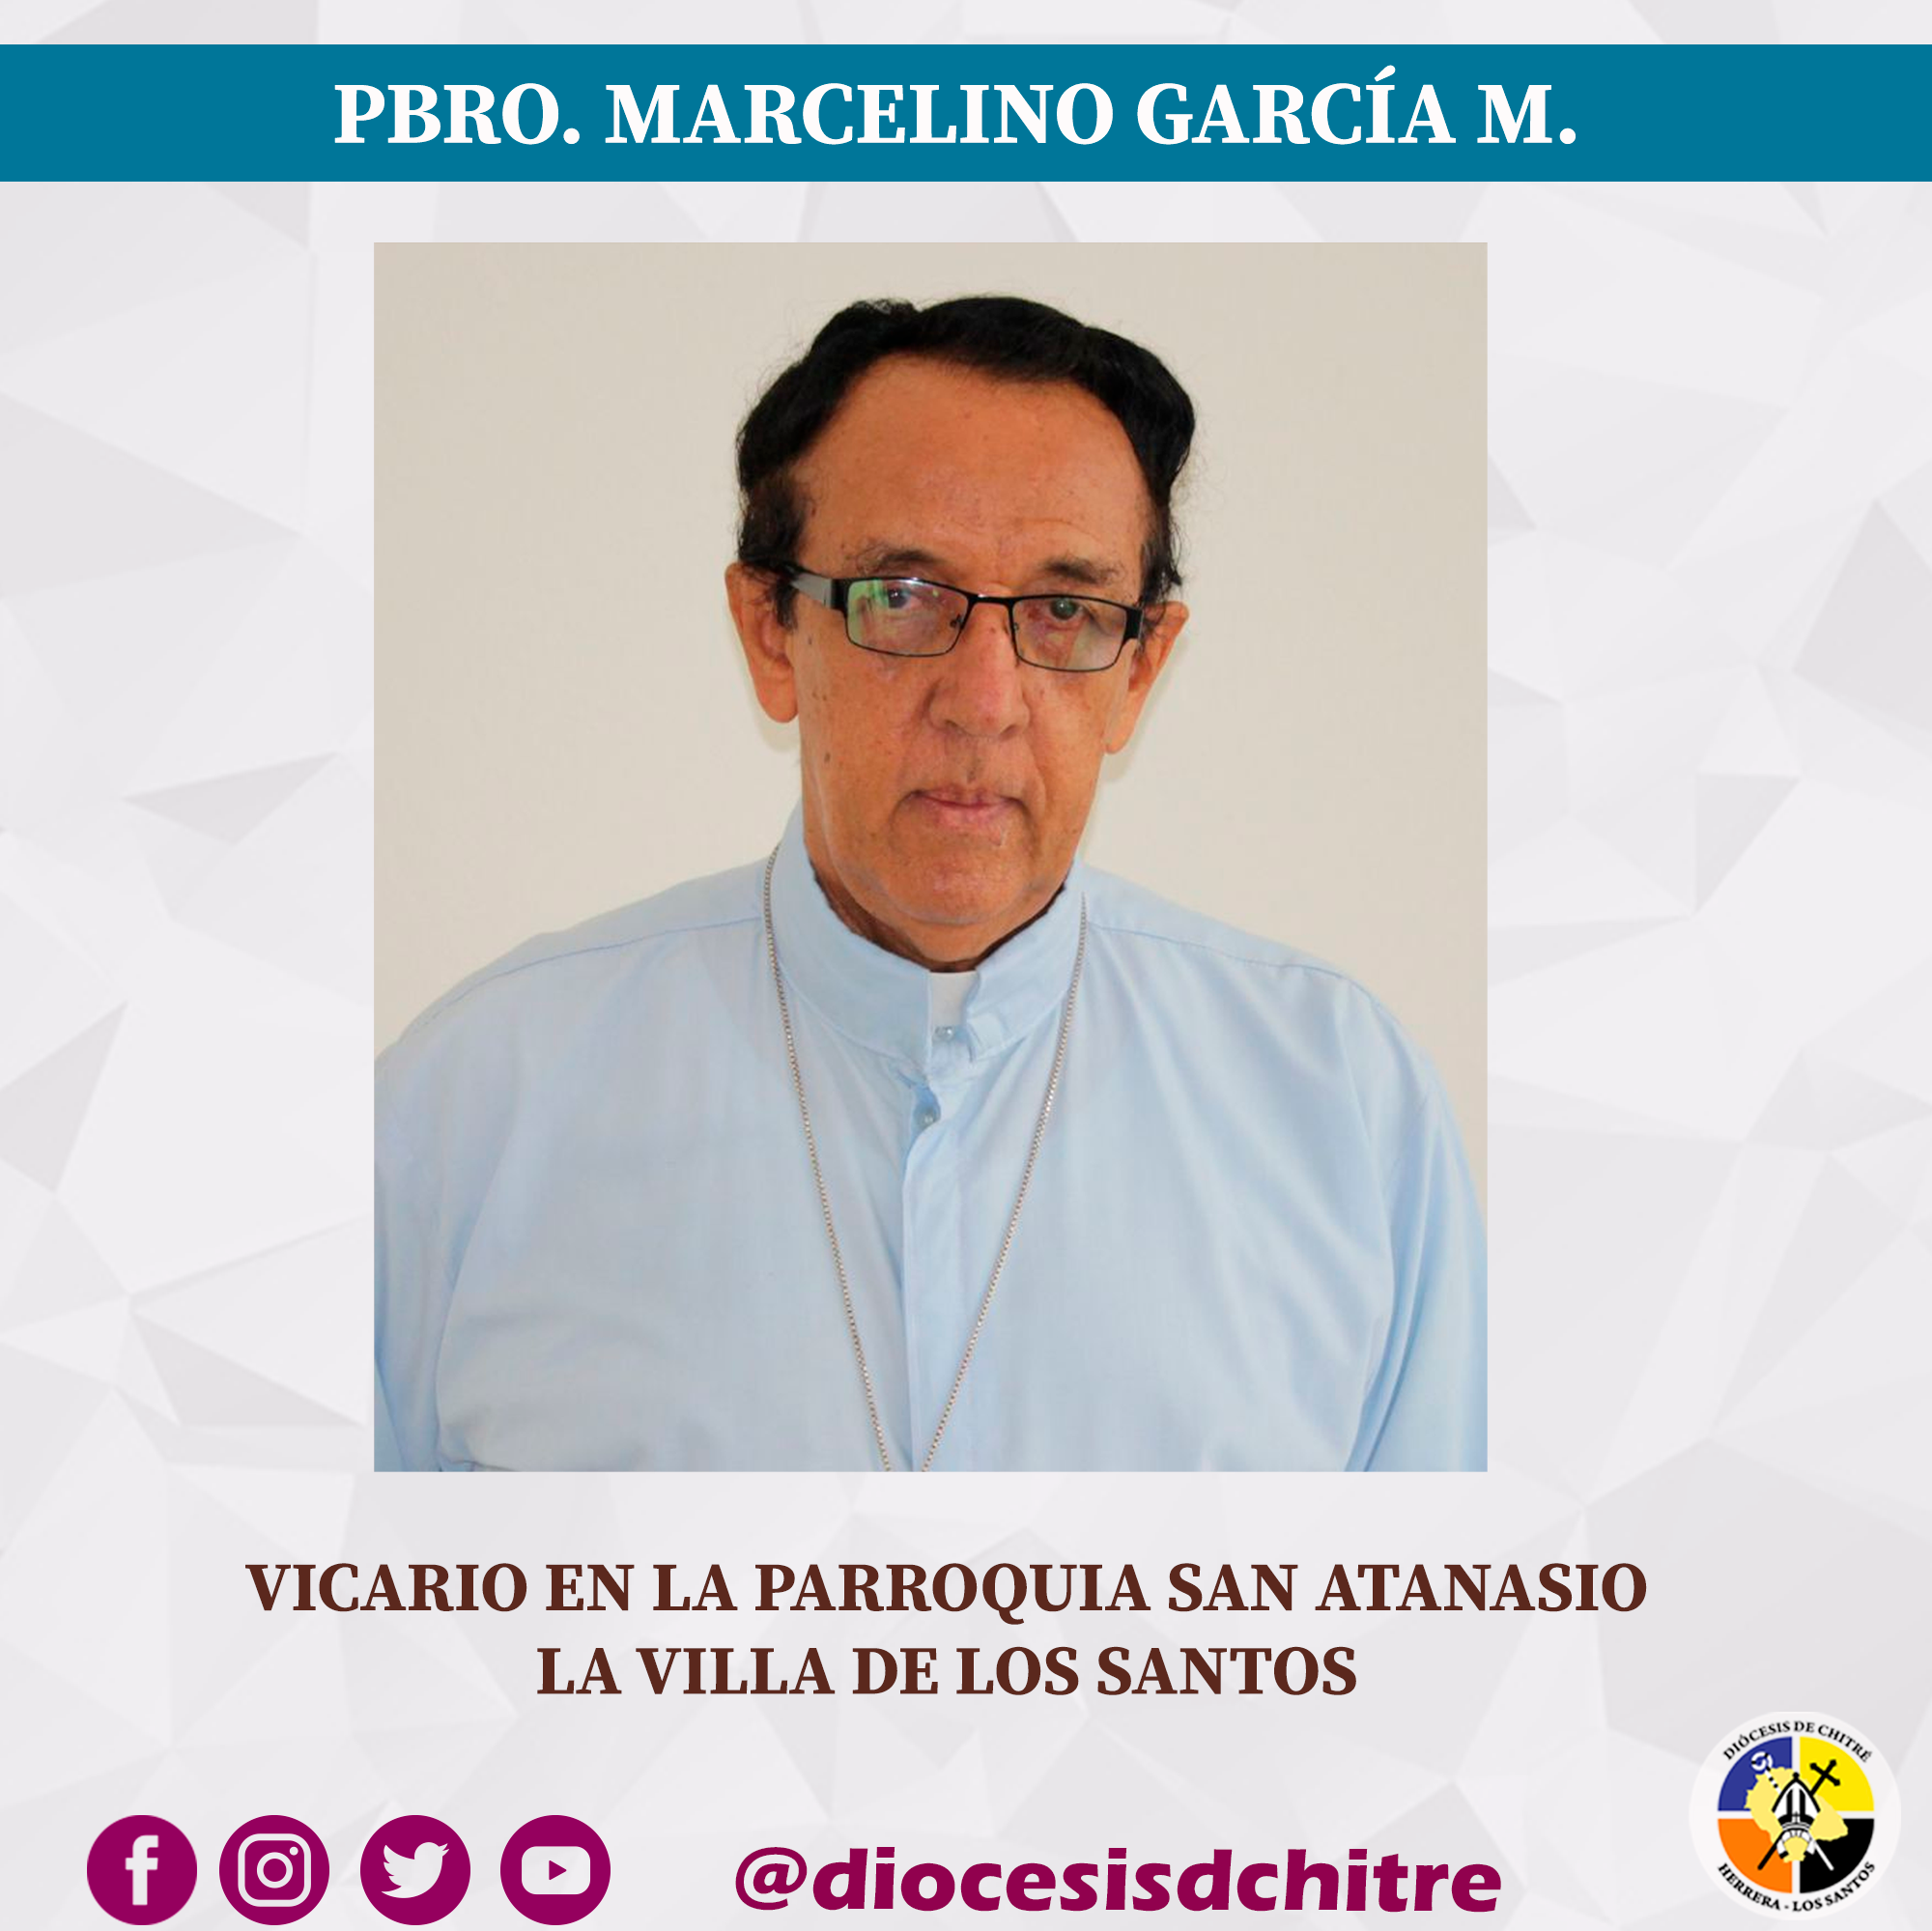 P. Marcelino